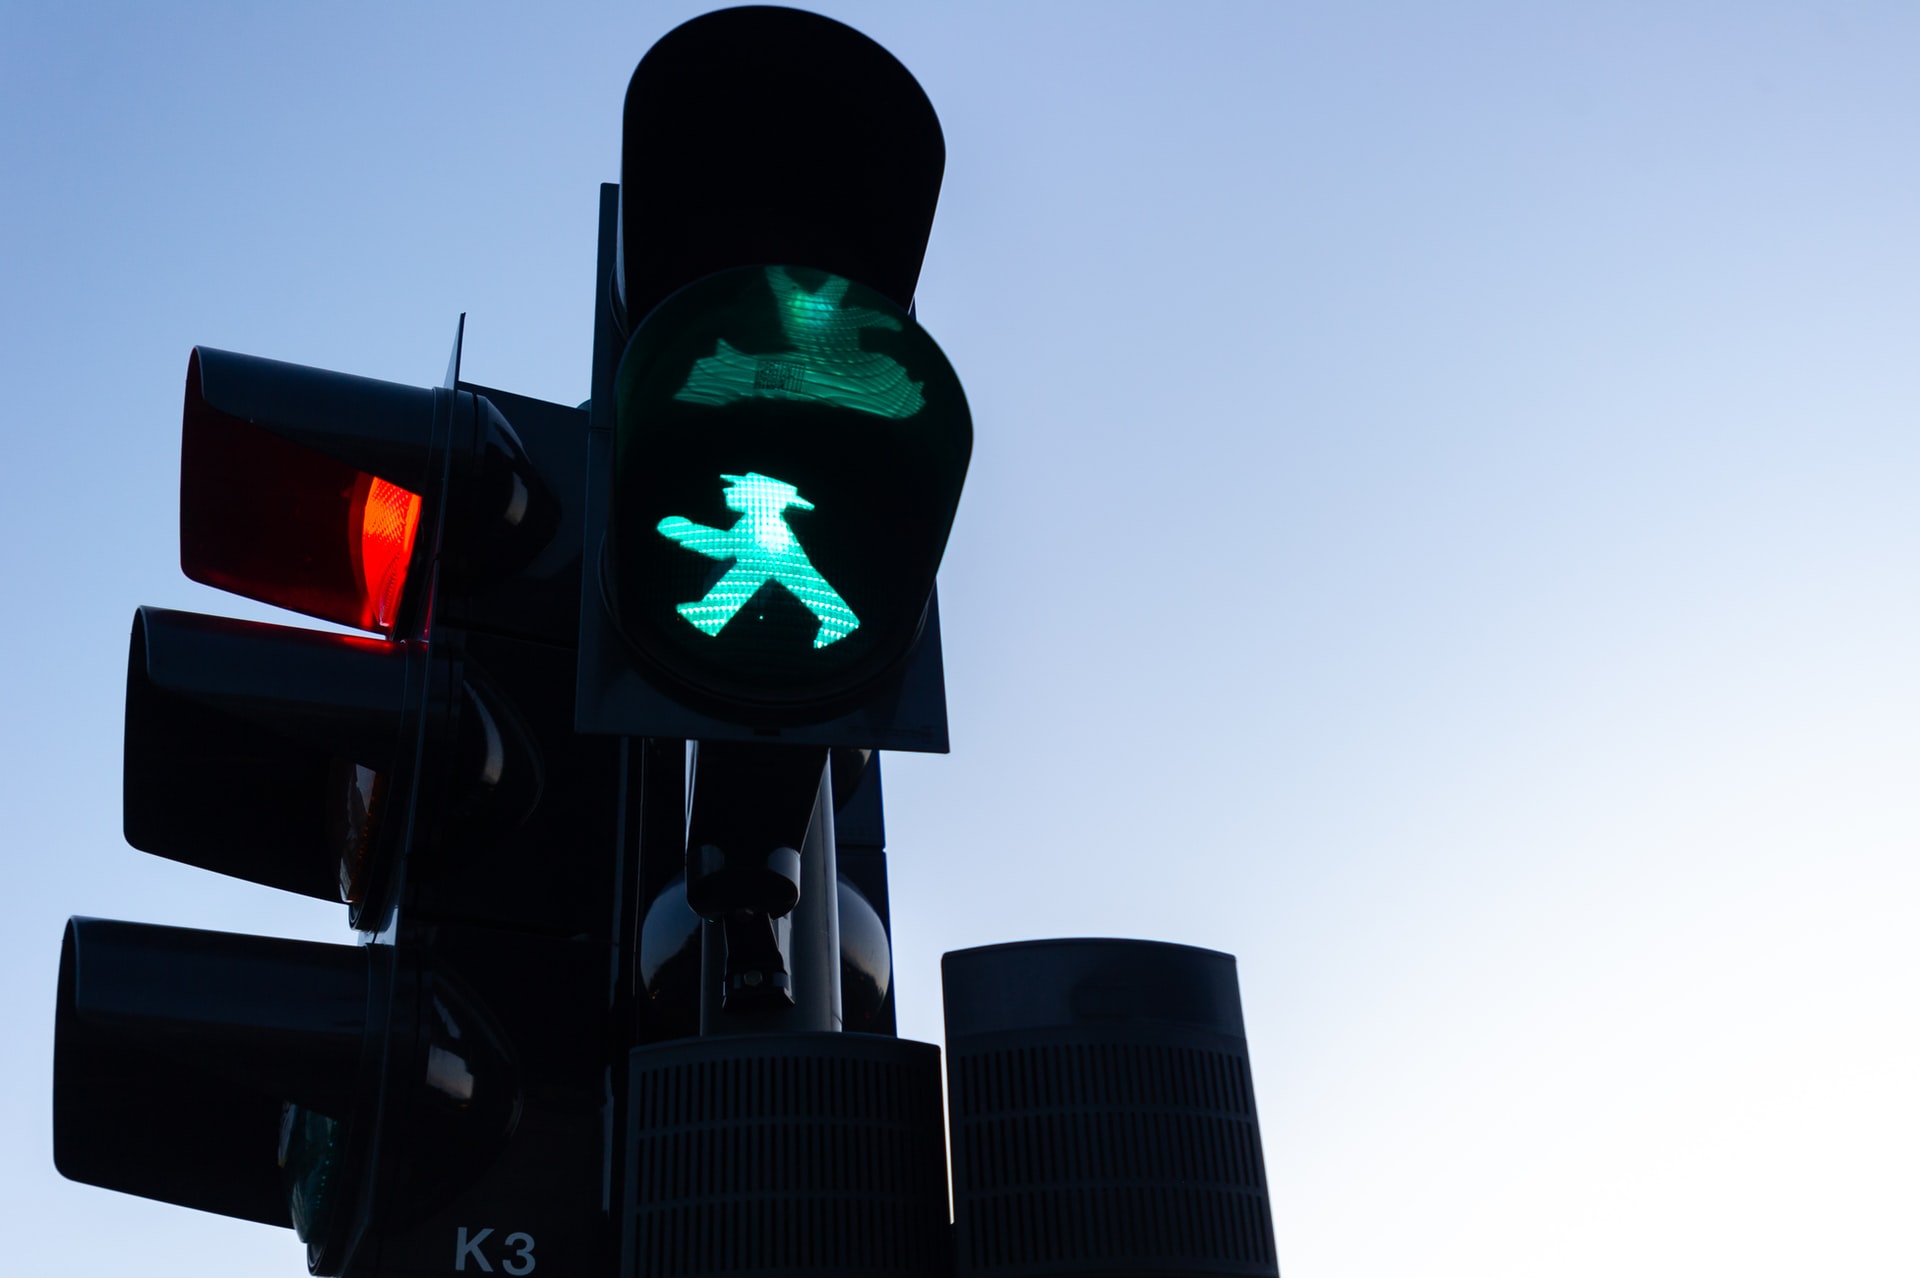 Traffic lights with a green light for pedestrians.